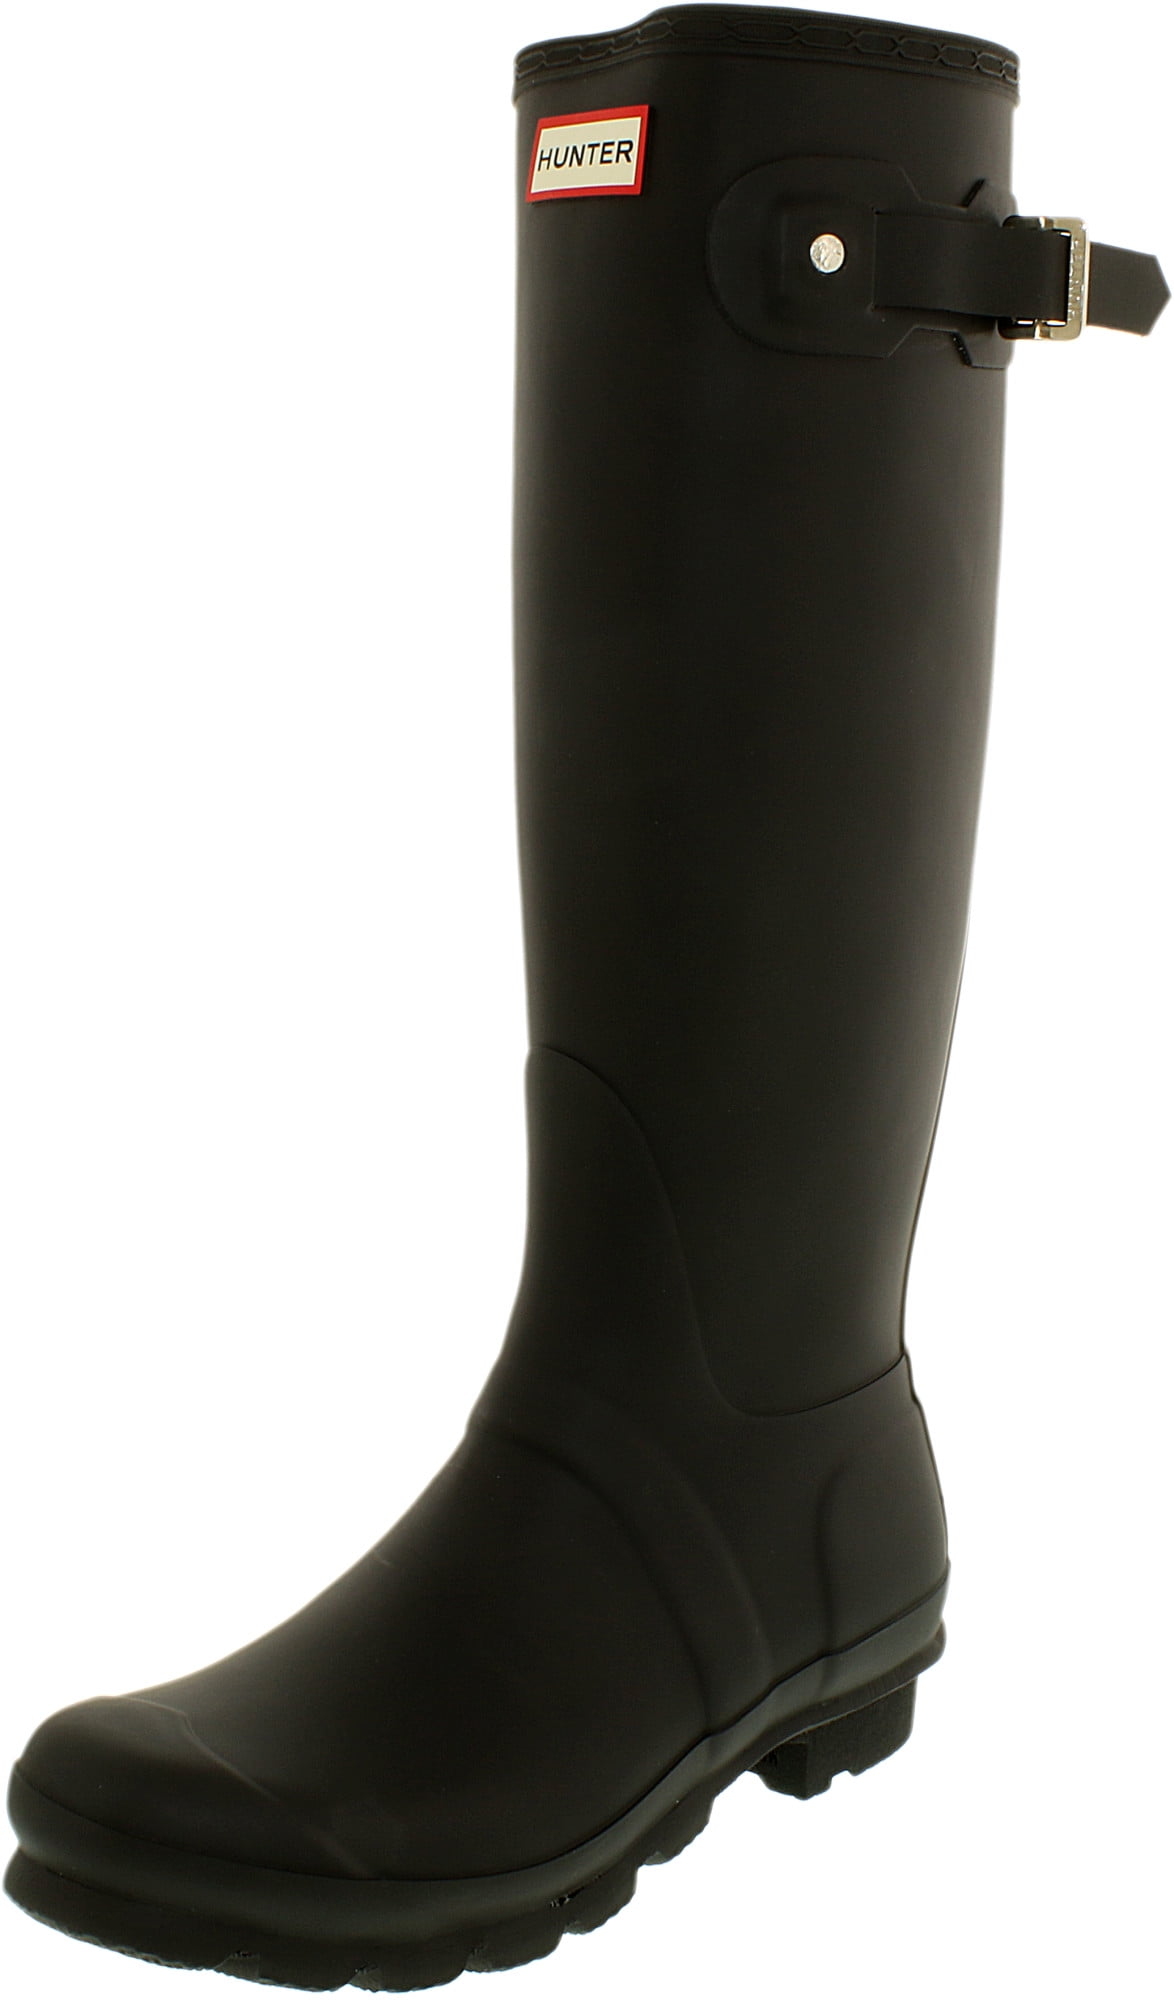 NEW Hunter Original Tall Rain Boot Brown Chocolate  12 M   13 F   45  46 EU 